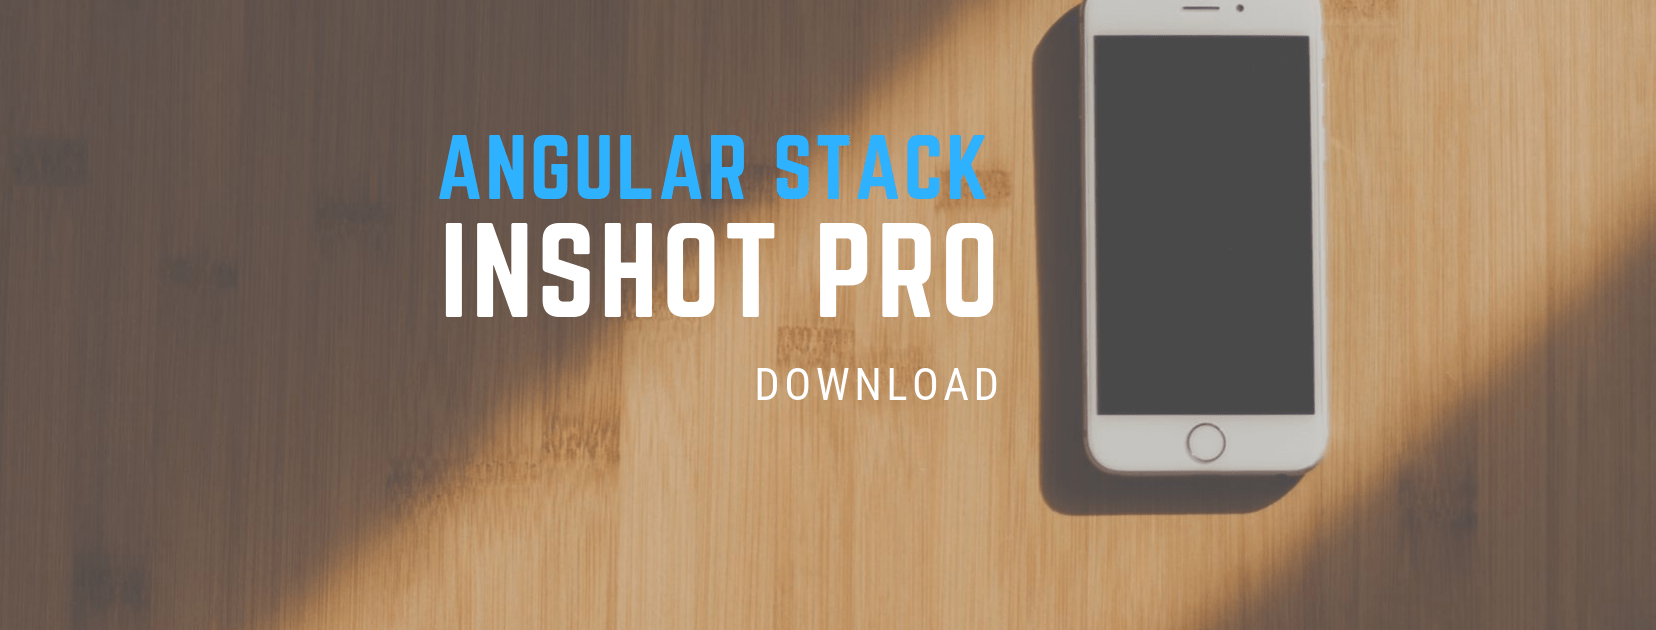 Inshot Pro Latest Apk Free Download Mod Unlocked Angular Stack Free Download Best Apk Apps